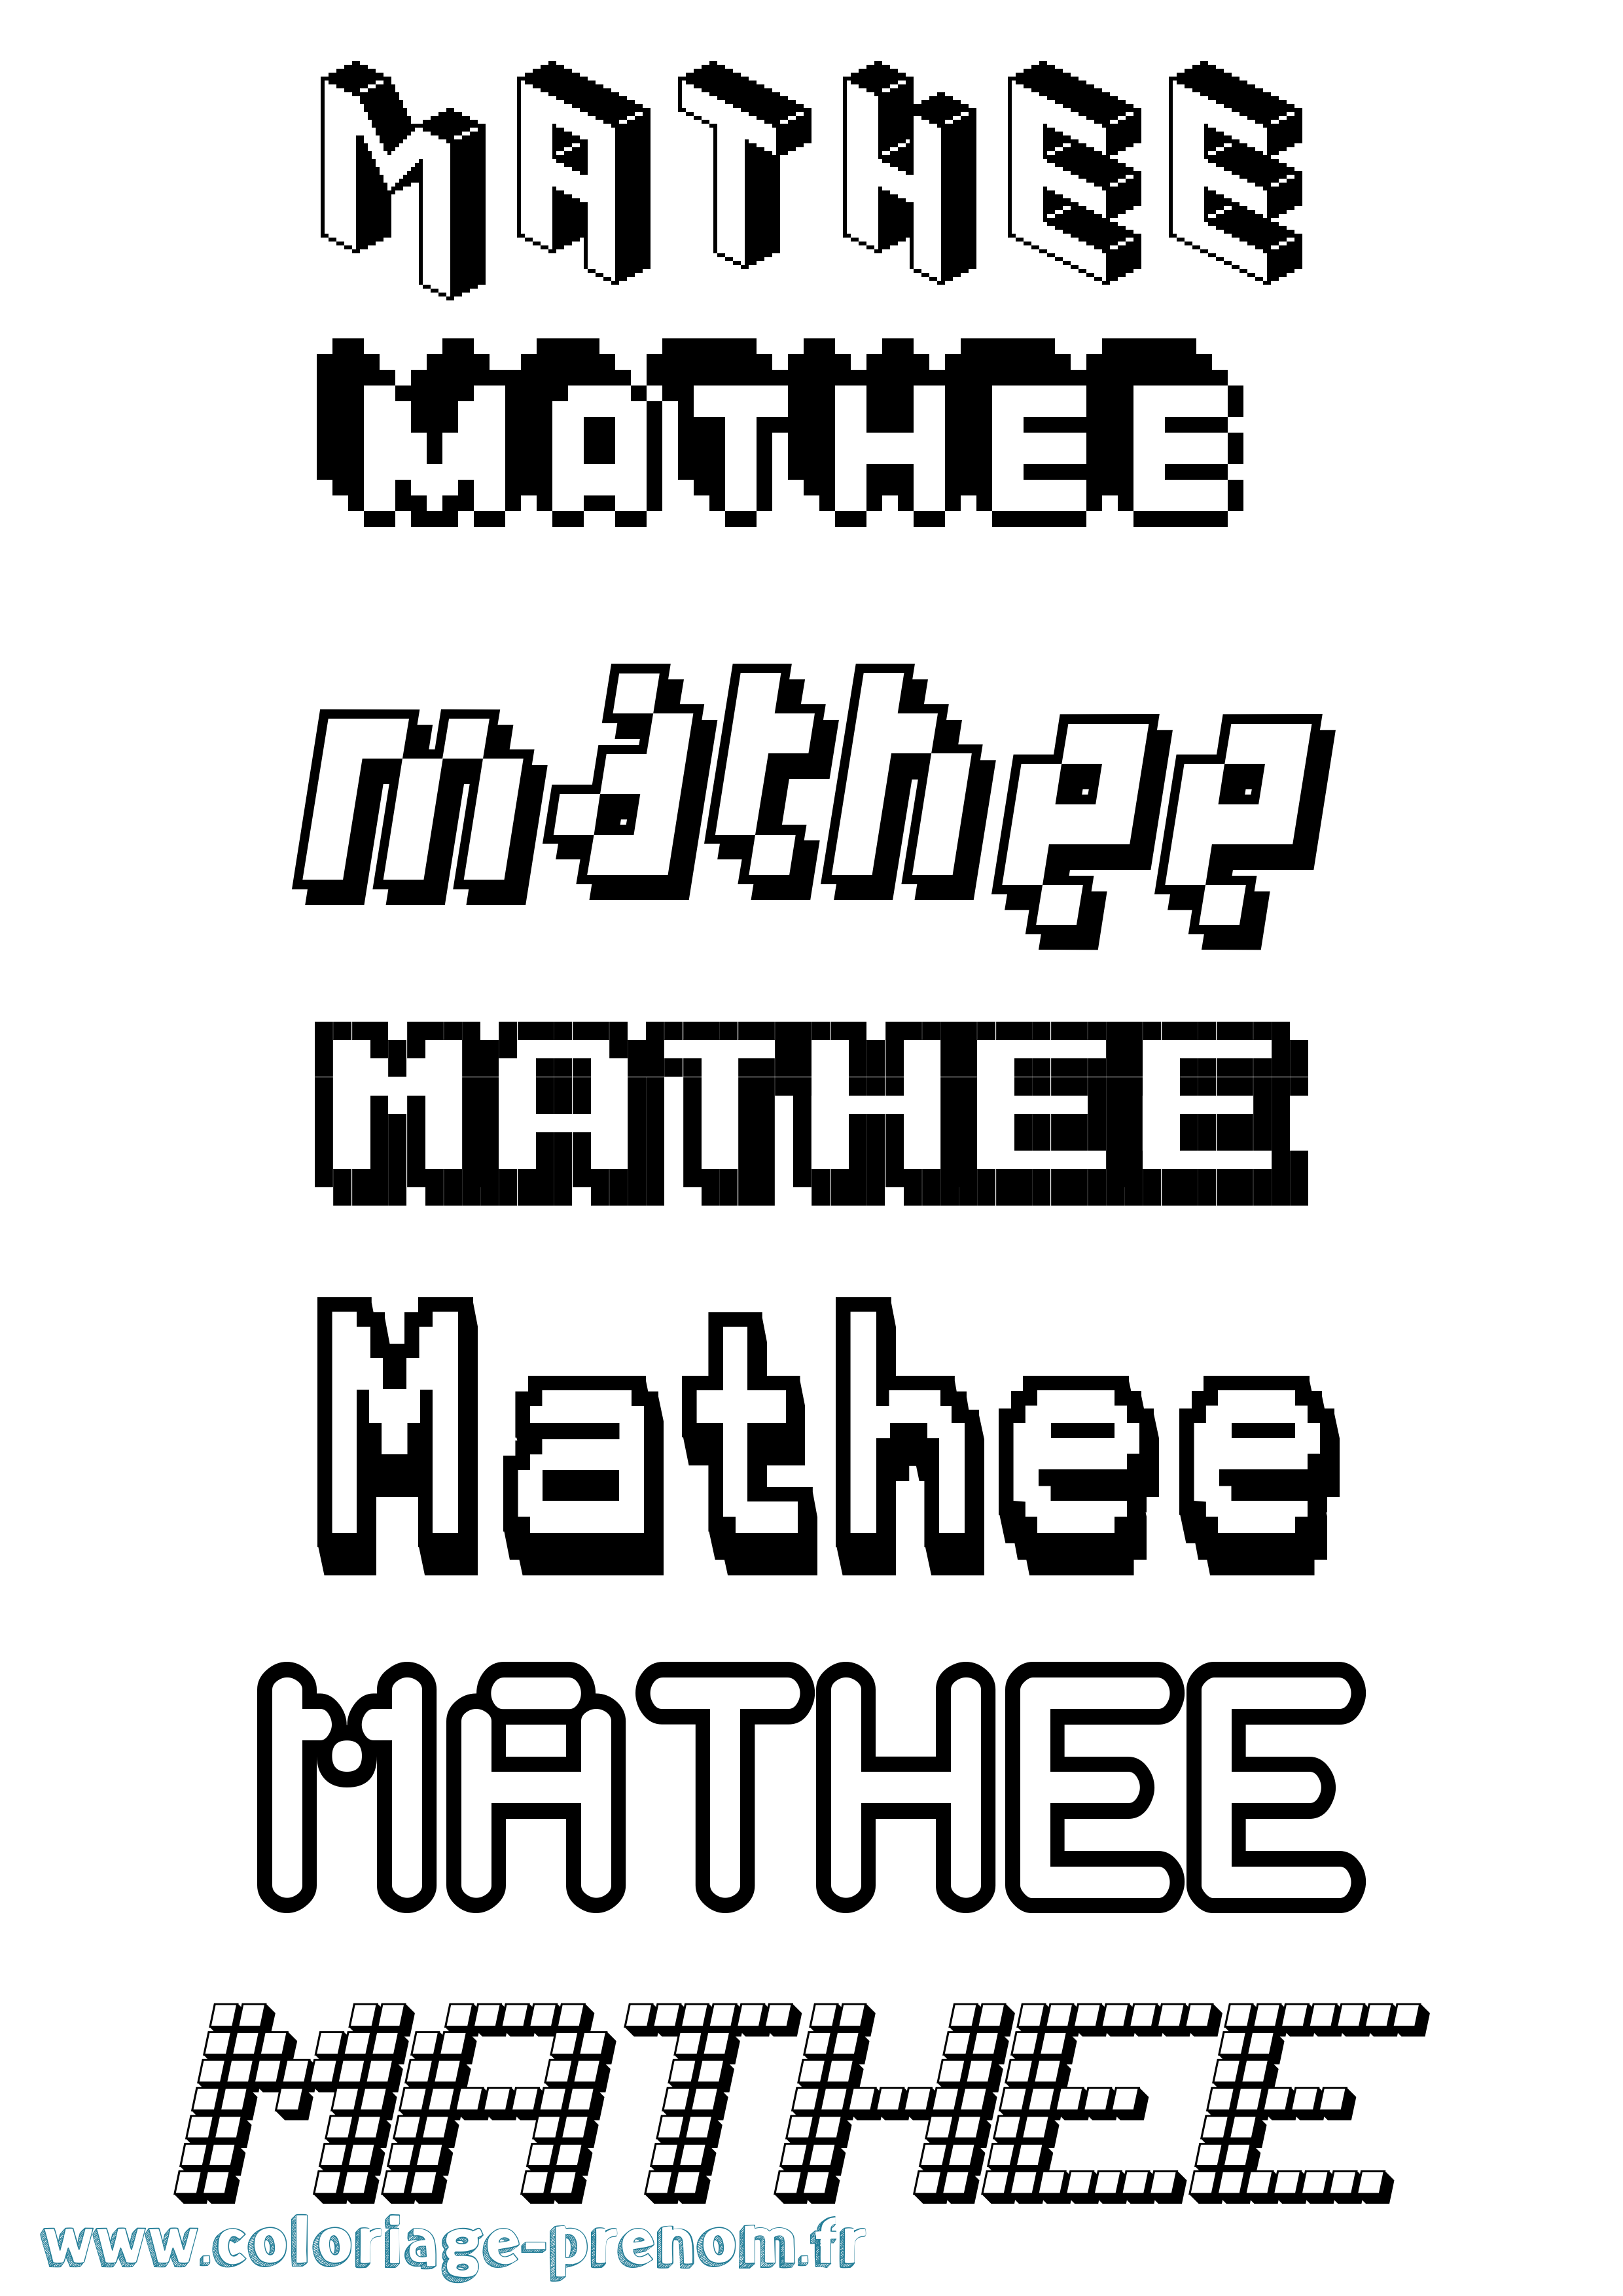 Coloriage prénom Mathee Pixel